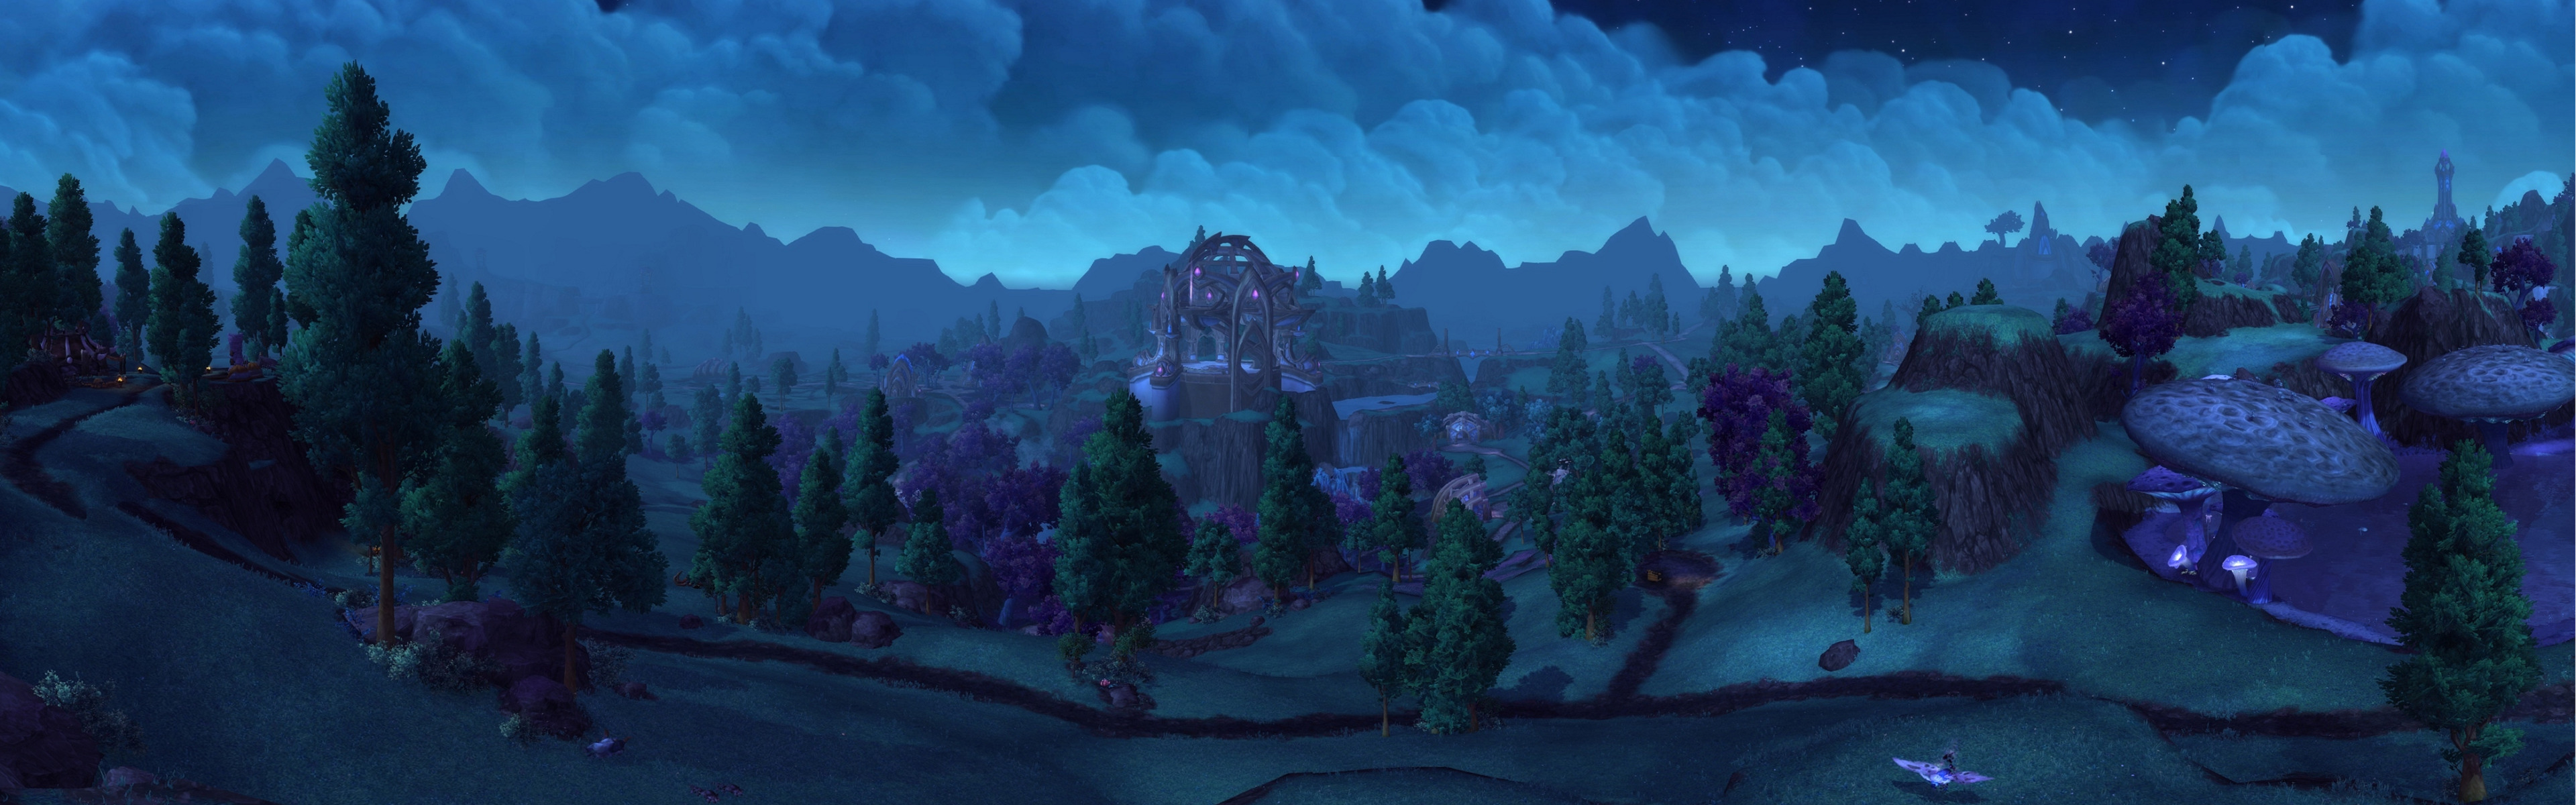 World Of Warcraft, Shadowmoon Valley, Warlords Of Draenor Wallpaper